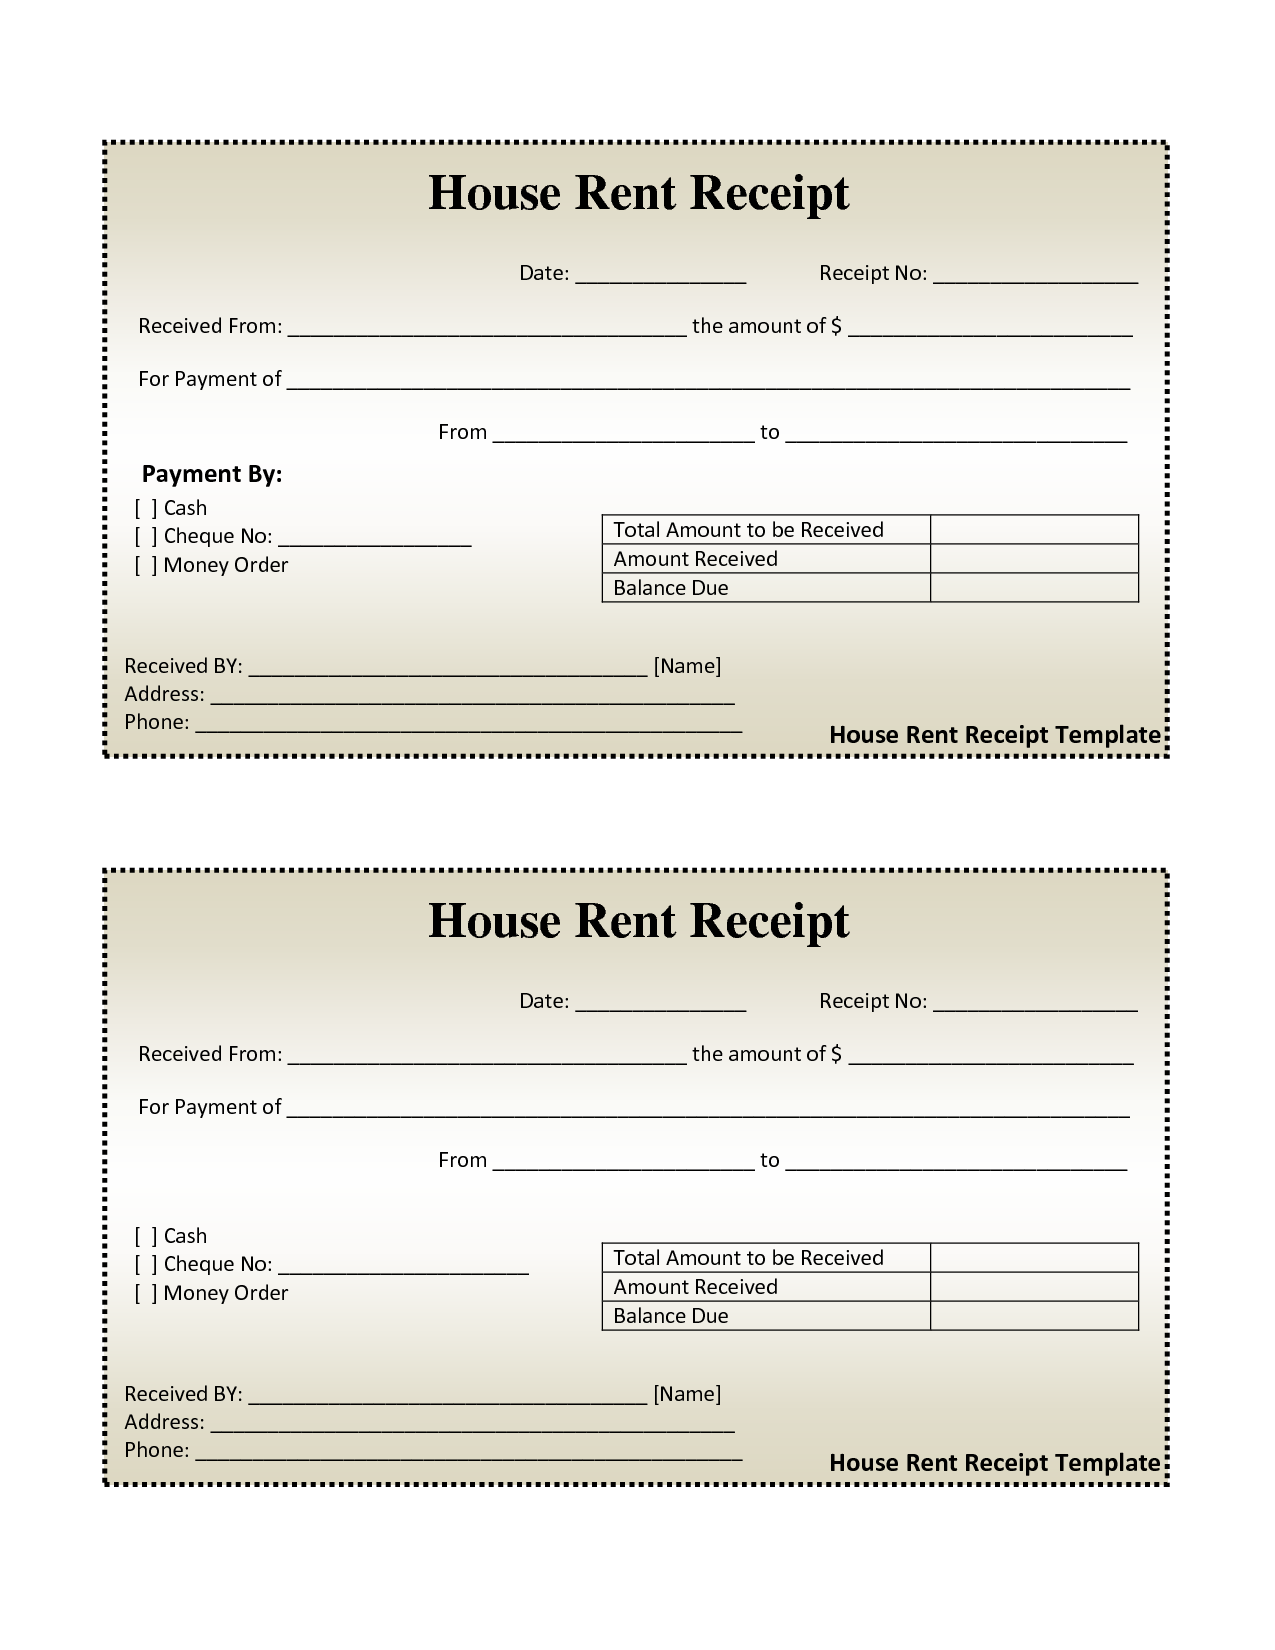 house rent receipt download